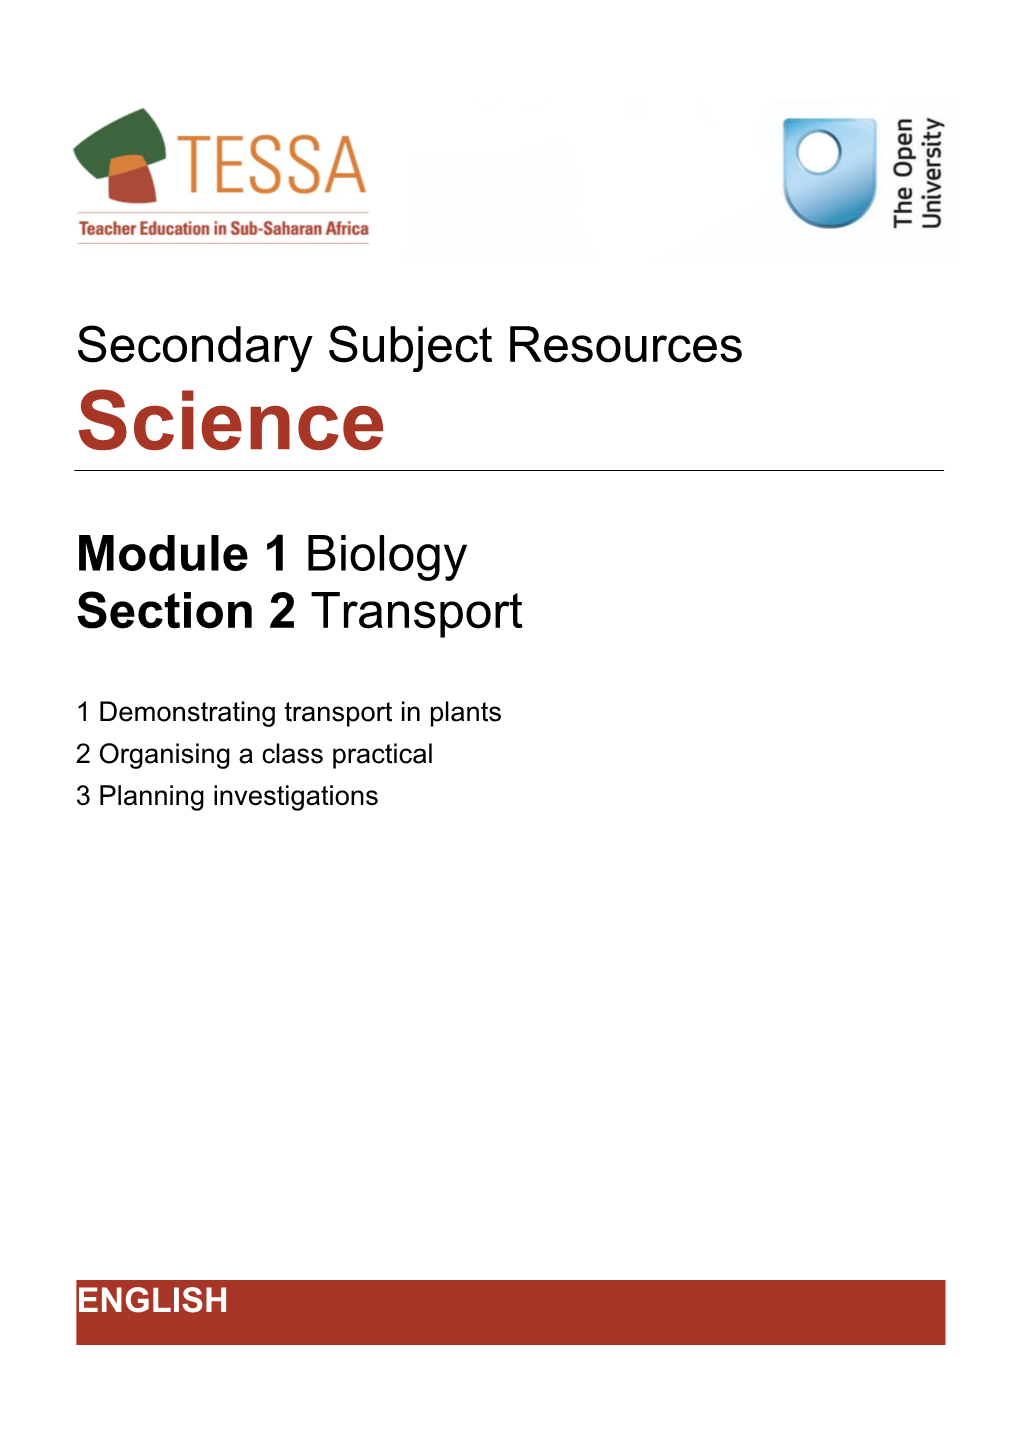 Module 1 Biology Section 2 Transport s1